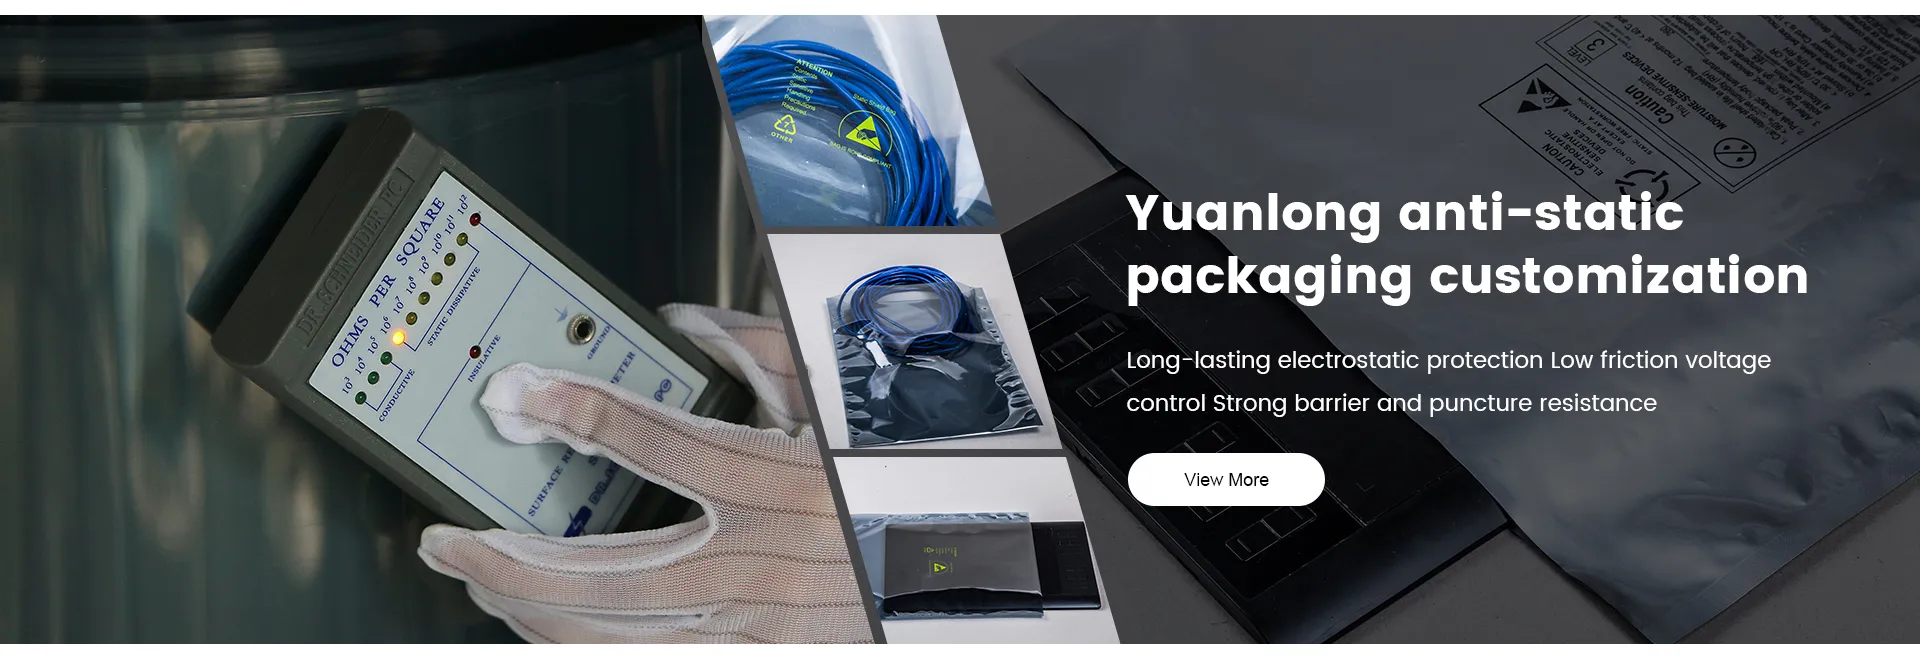 Yuanlong anti-static packaging customization